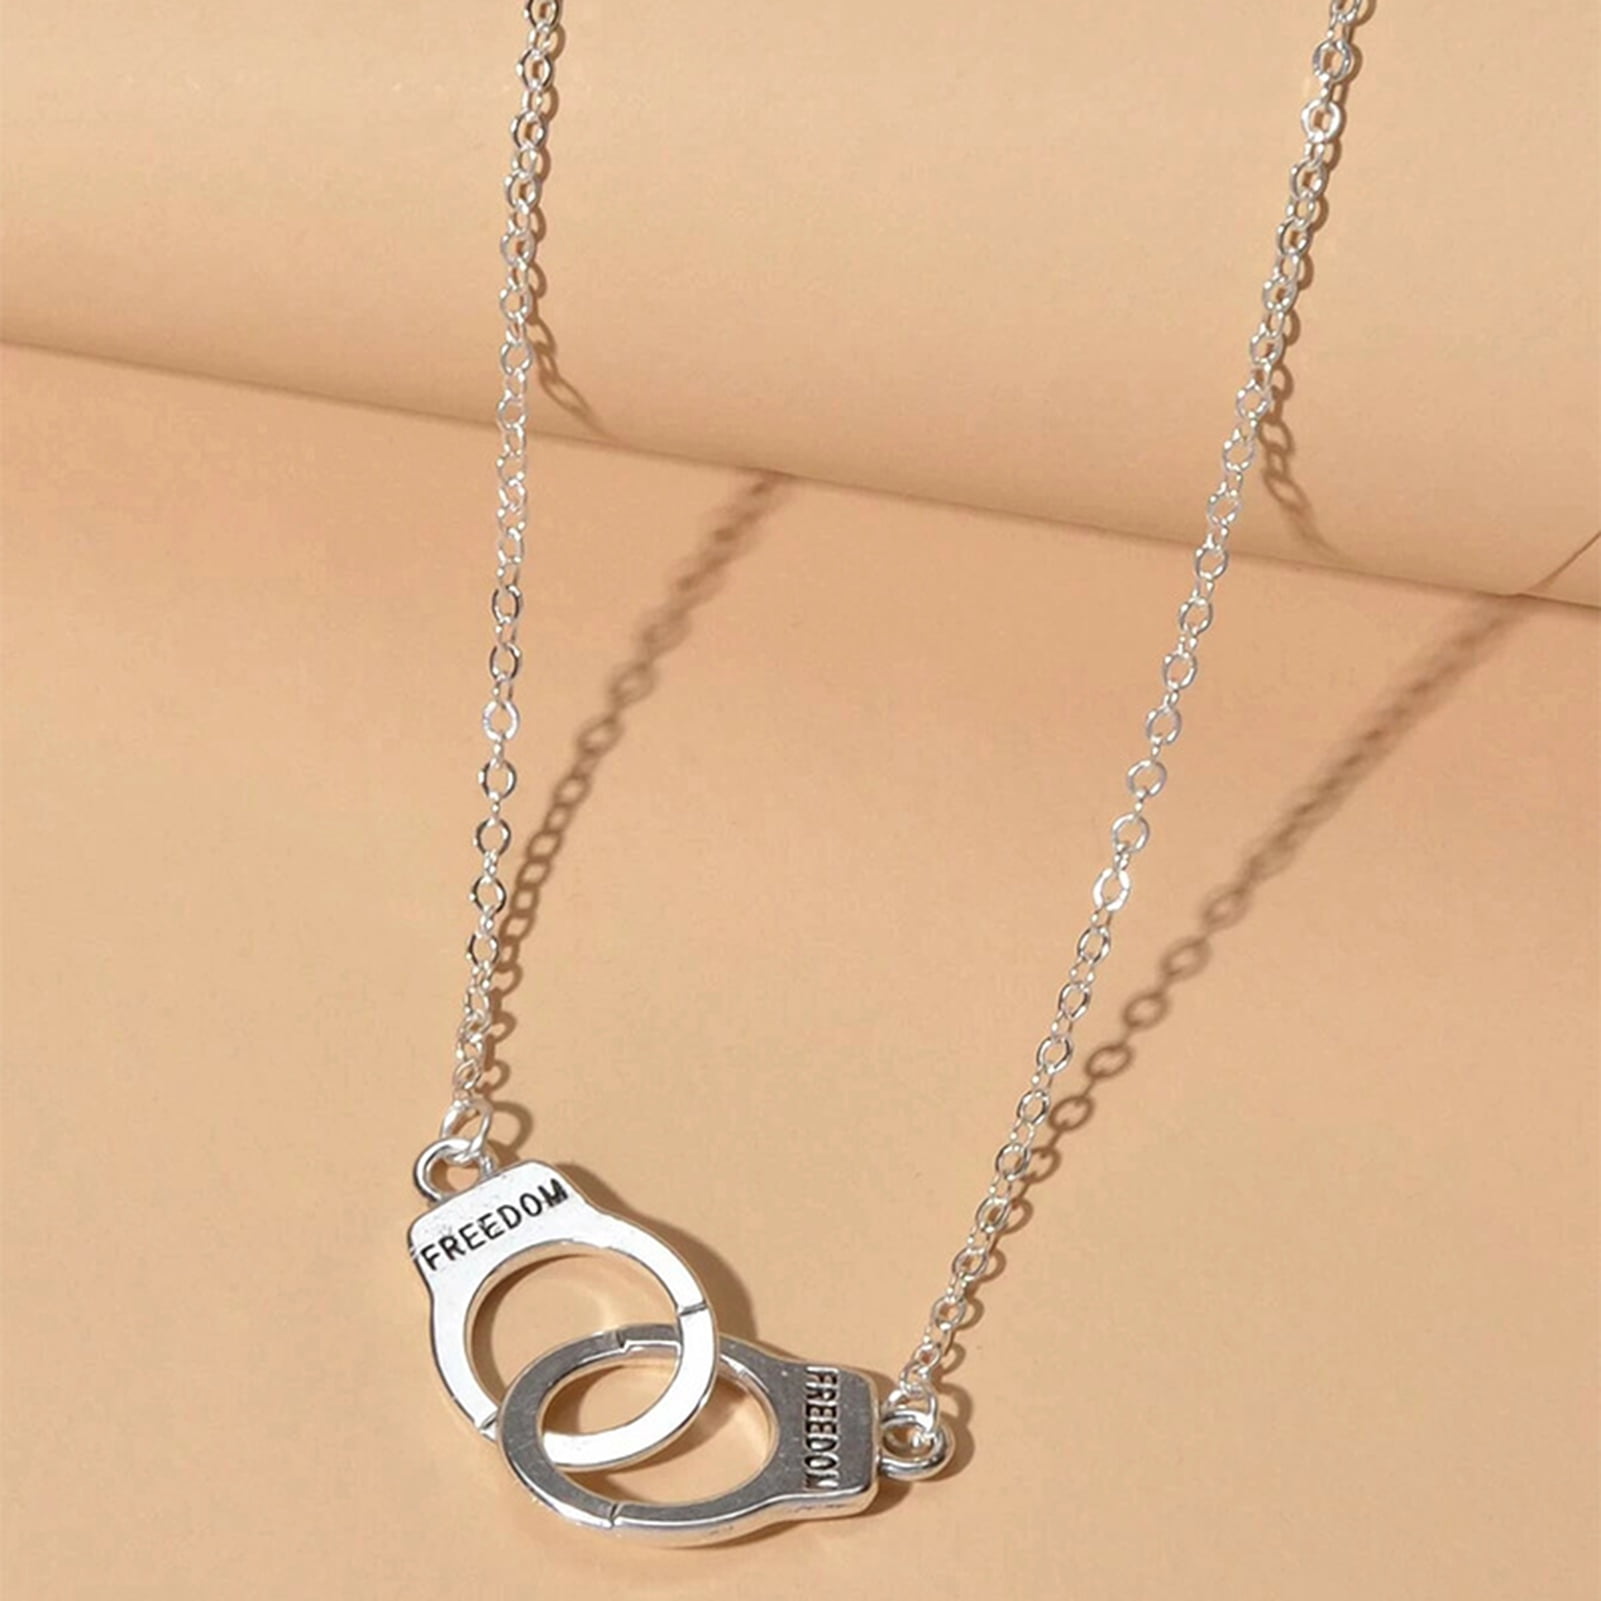 New Fashion Design Handcuffs Choker Pendant Necklace Chain Women Lovers Gift T^ 